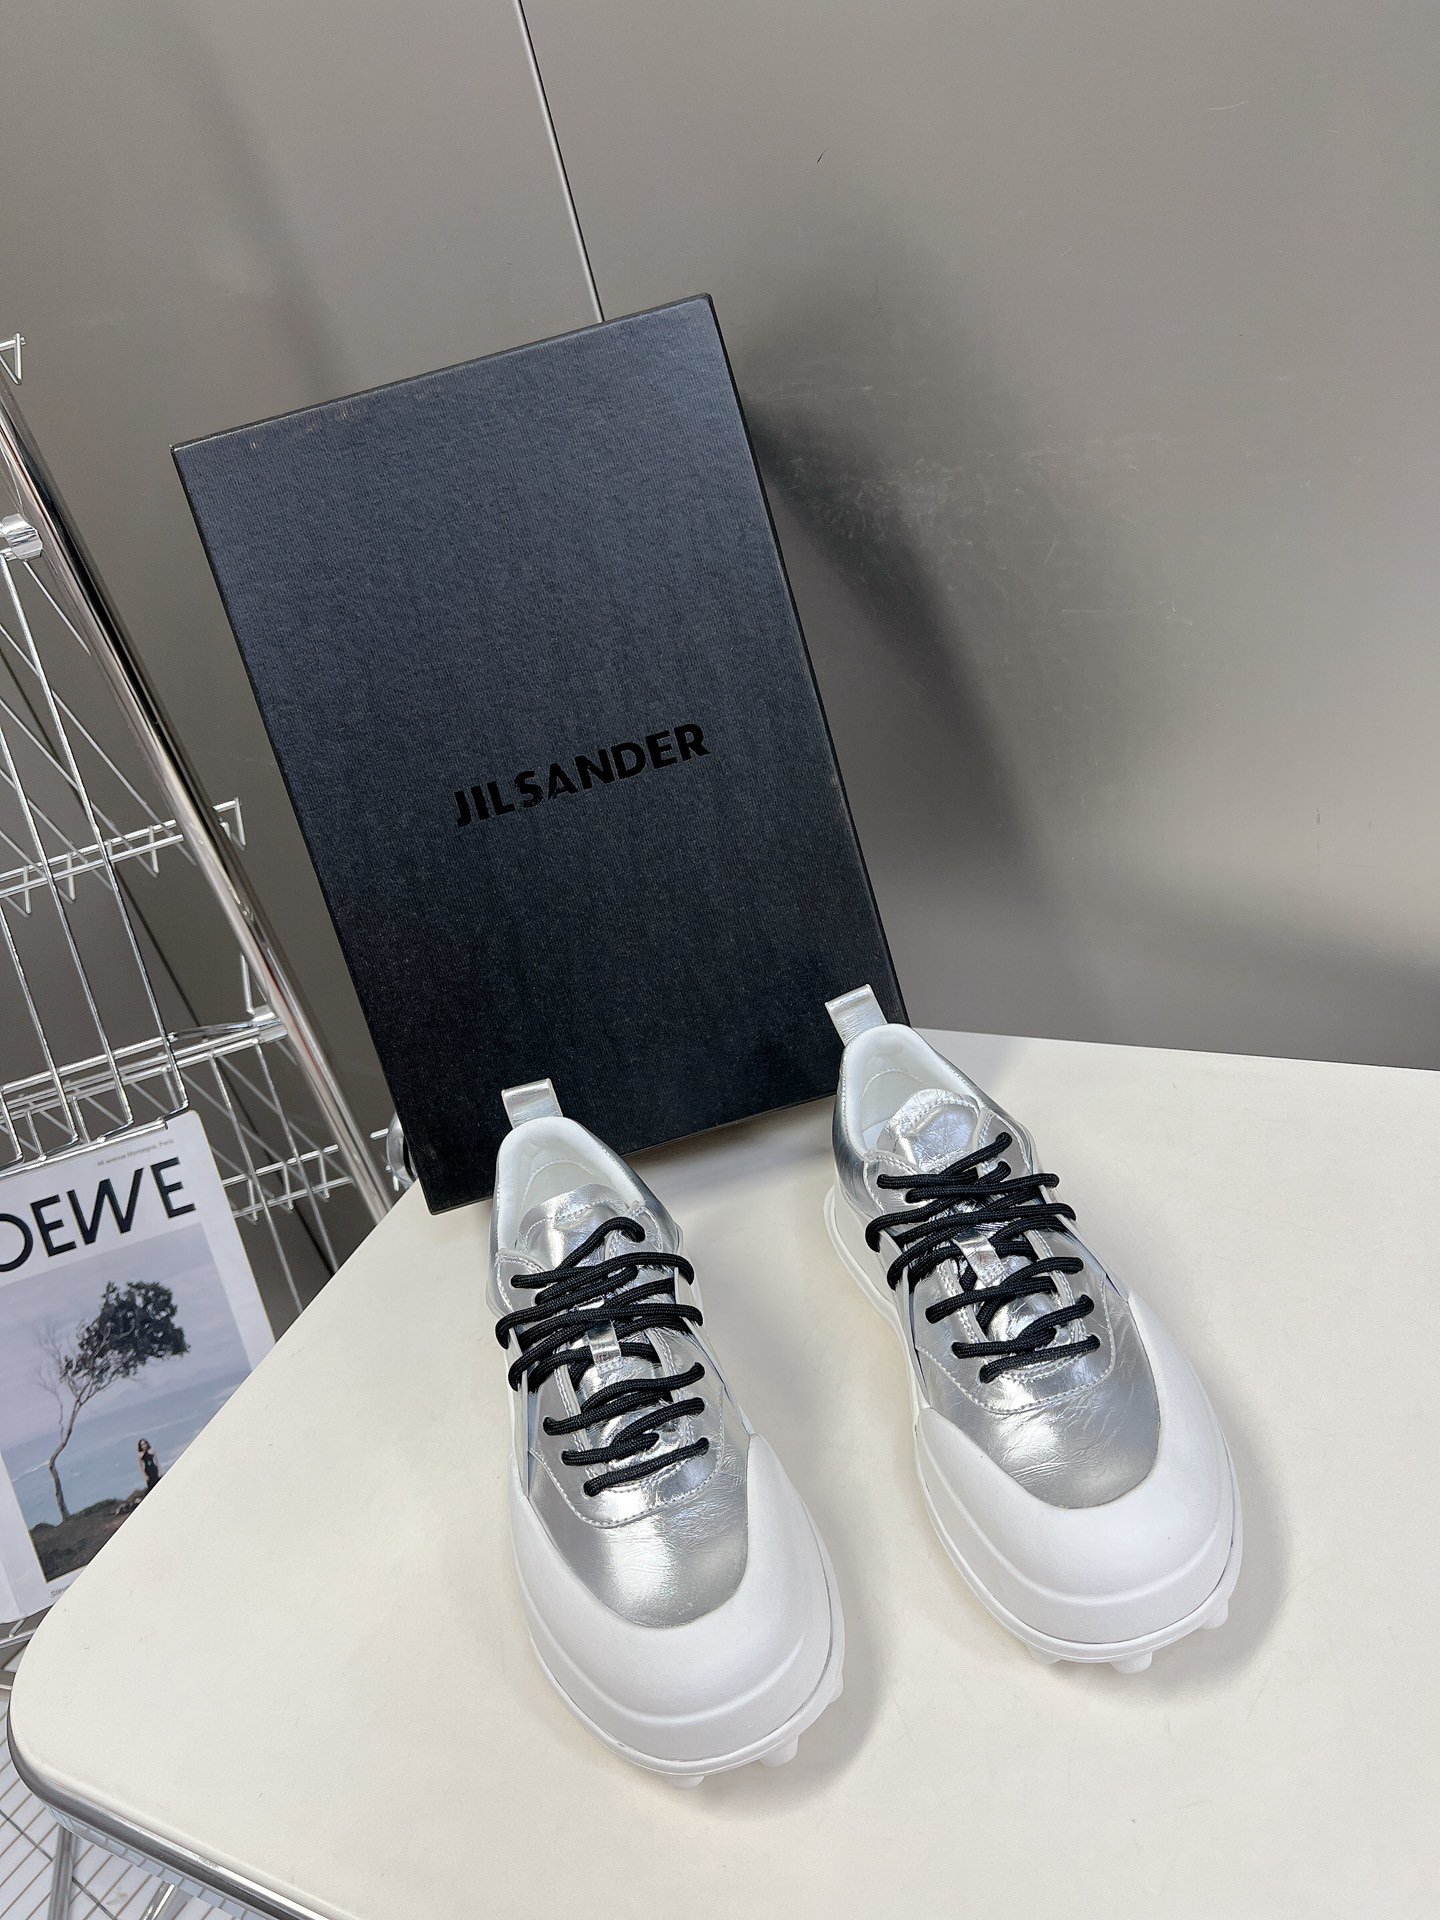 JilSander吉尔桑达最新休闲运动鞋款吉尔在创意总监Lucie和LukeMeier的掌舵下为经典鞋类